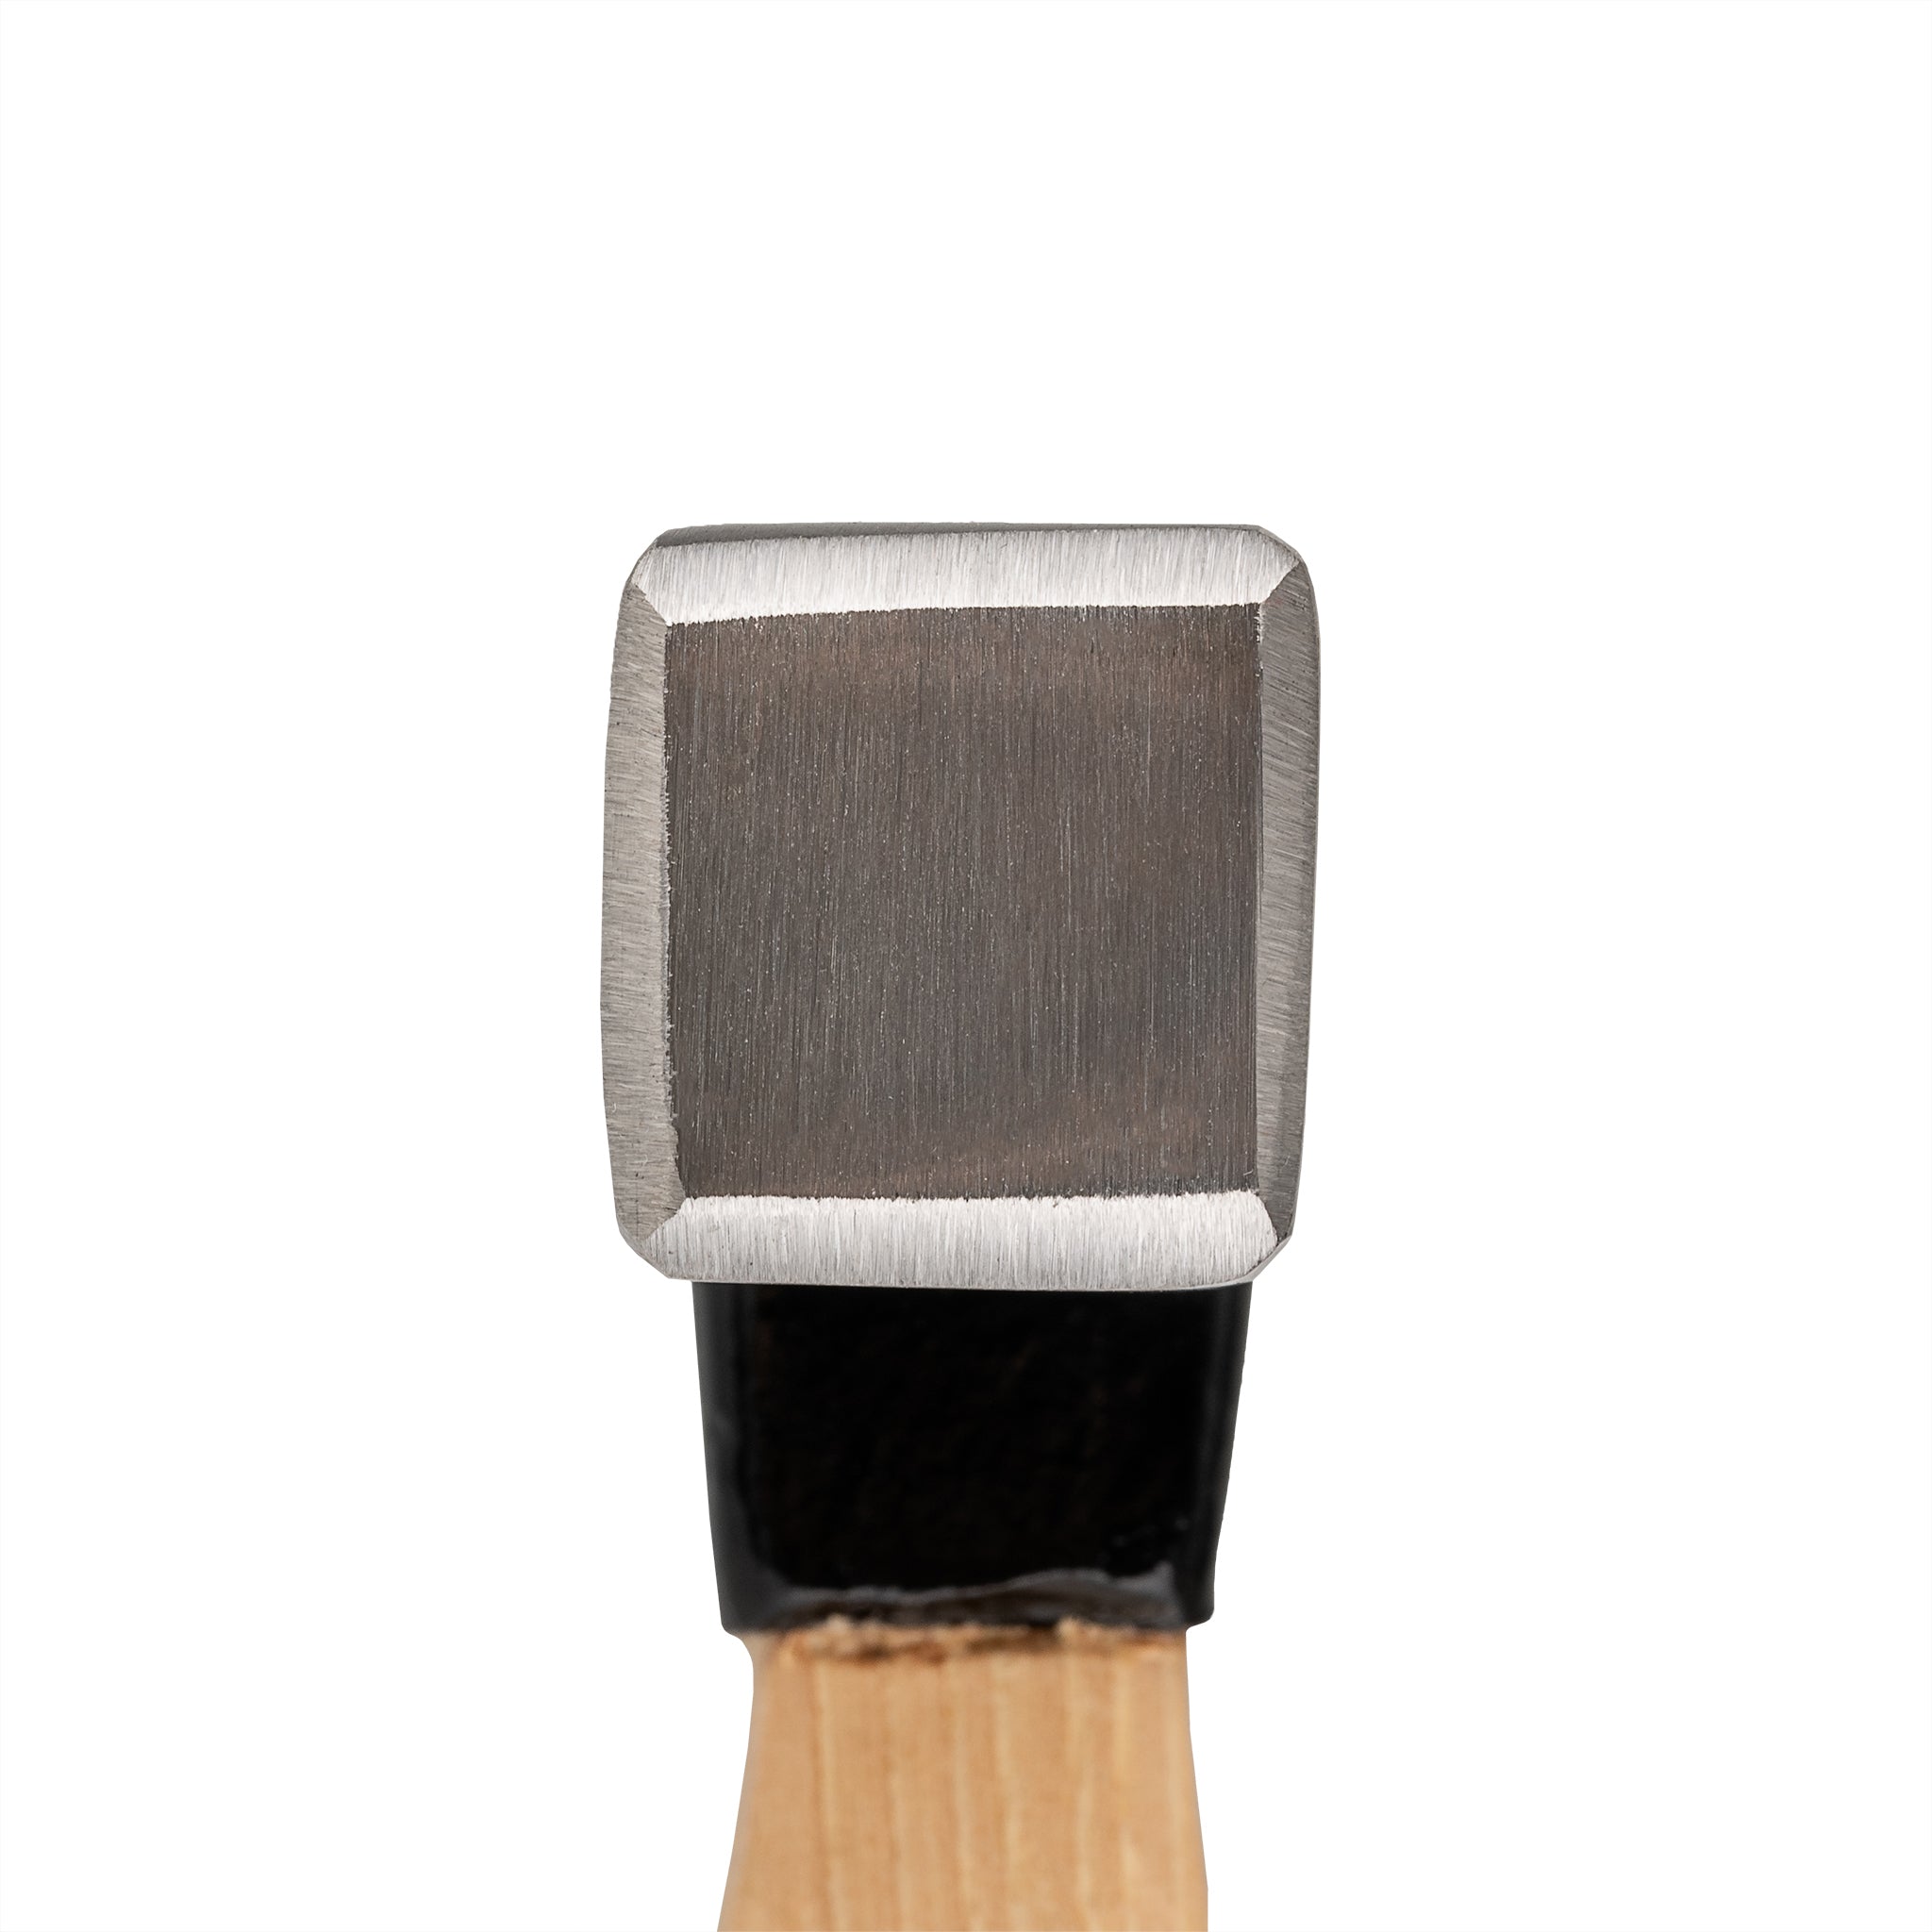 16 oz. Smooth Square Head Bricklayer Hammer